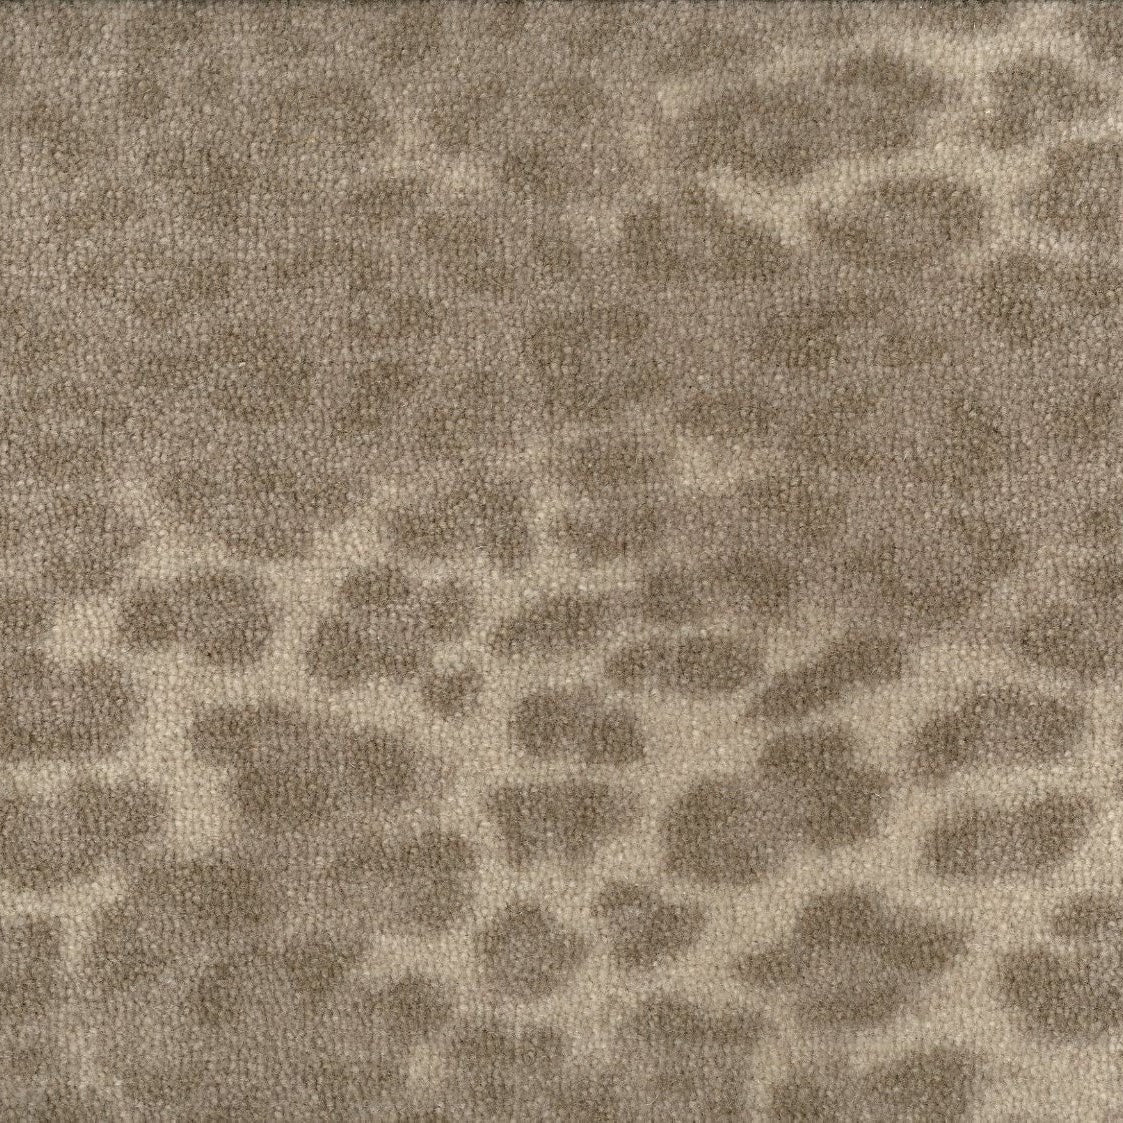 Animal Print Carpet: Leopard Cheetah Zebra | Landry & Arcari